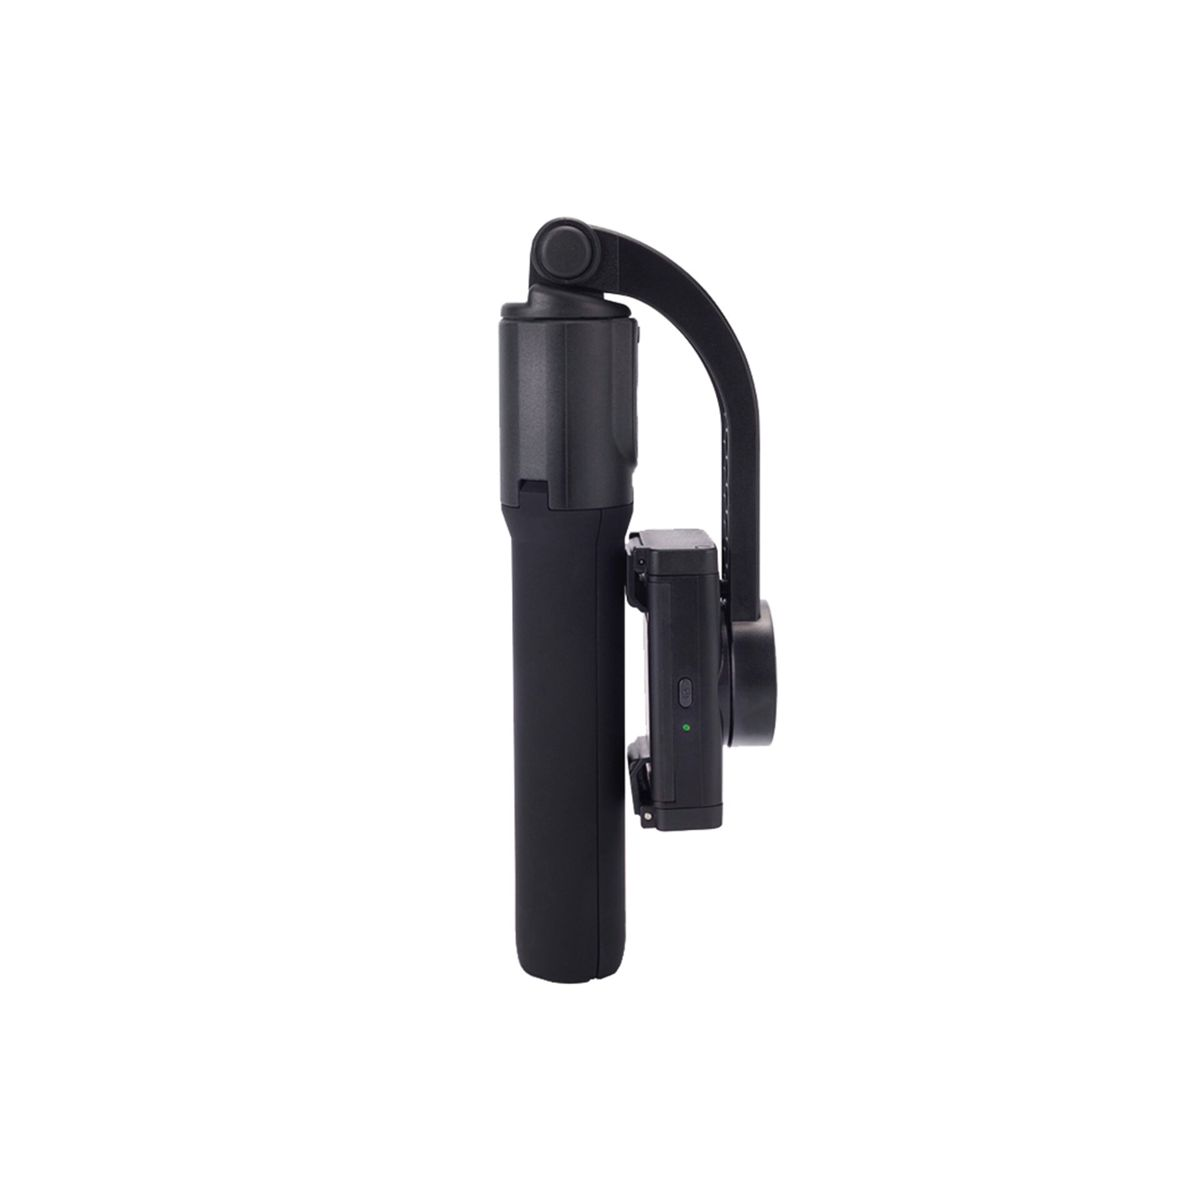 EASYPIX GoXtreme GS1 1-AXIS Selfie Gimbal Gimbal Smartphone schwarz für